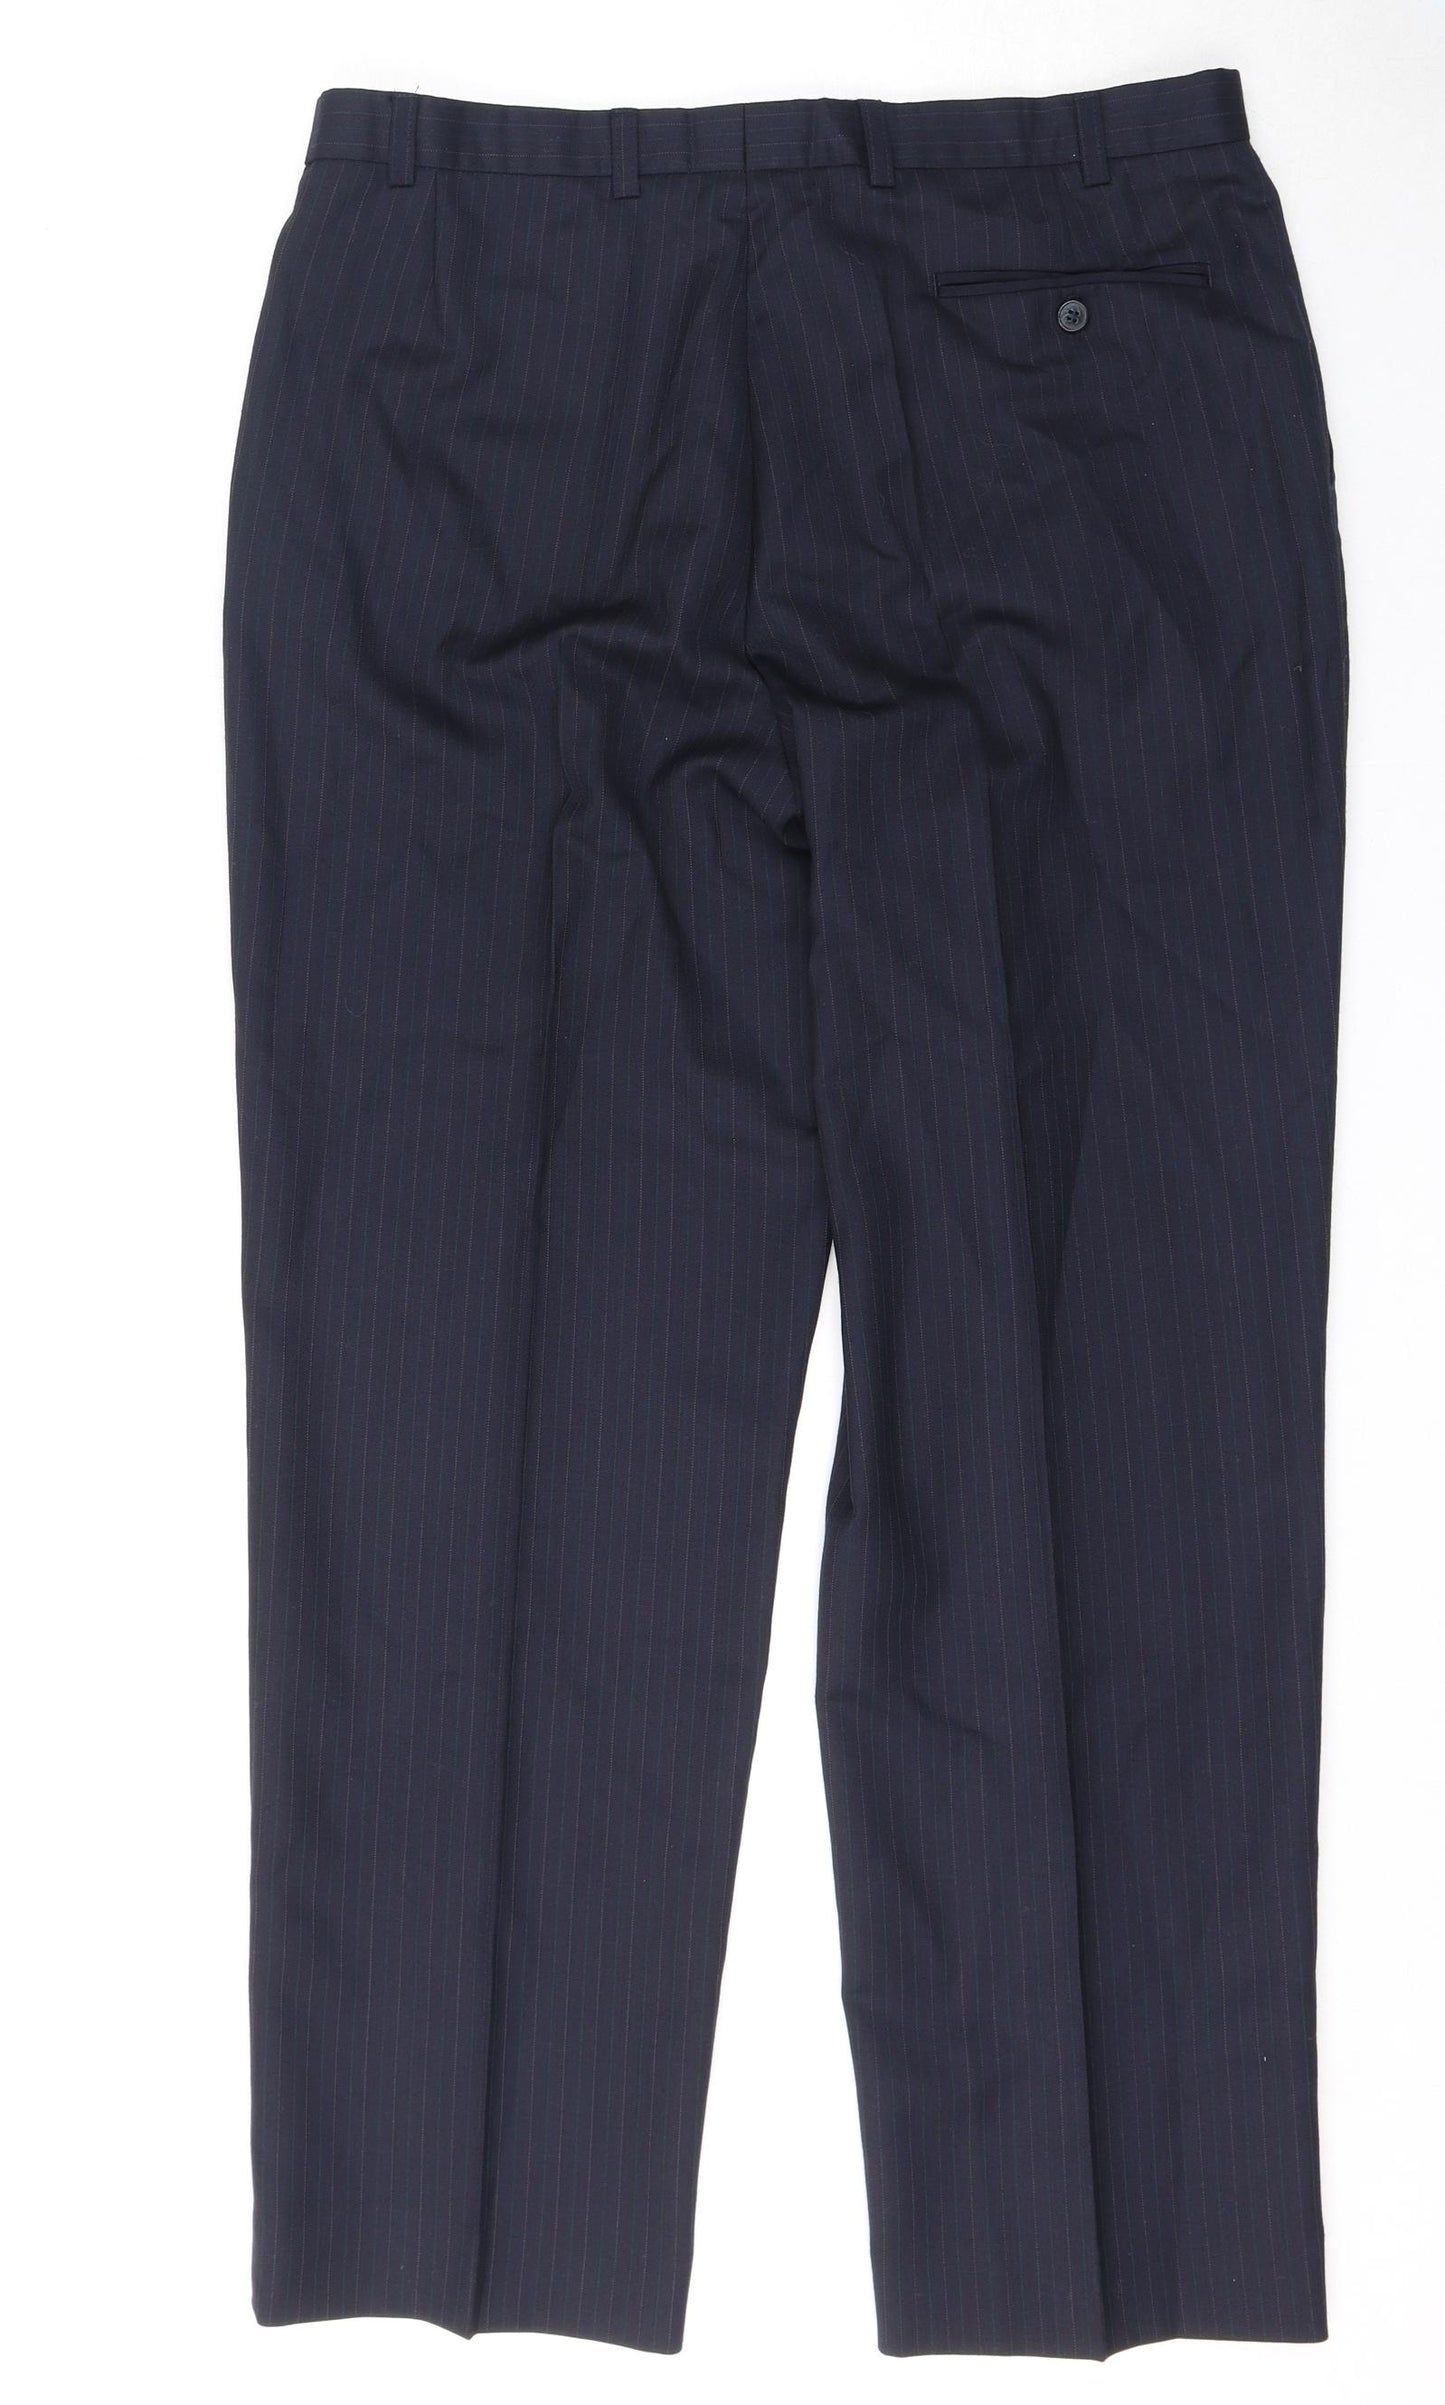 St Michael Mens Blue Striped Wool Dress Pants Trousers Size 36 in L31 in Regular Zip